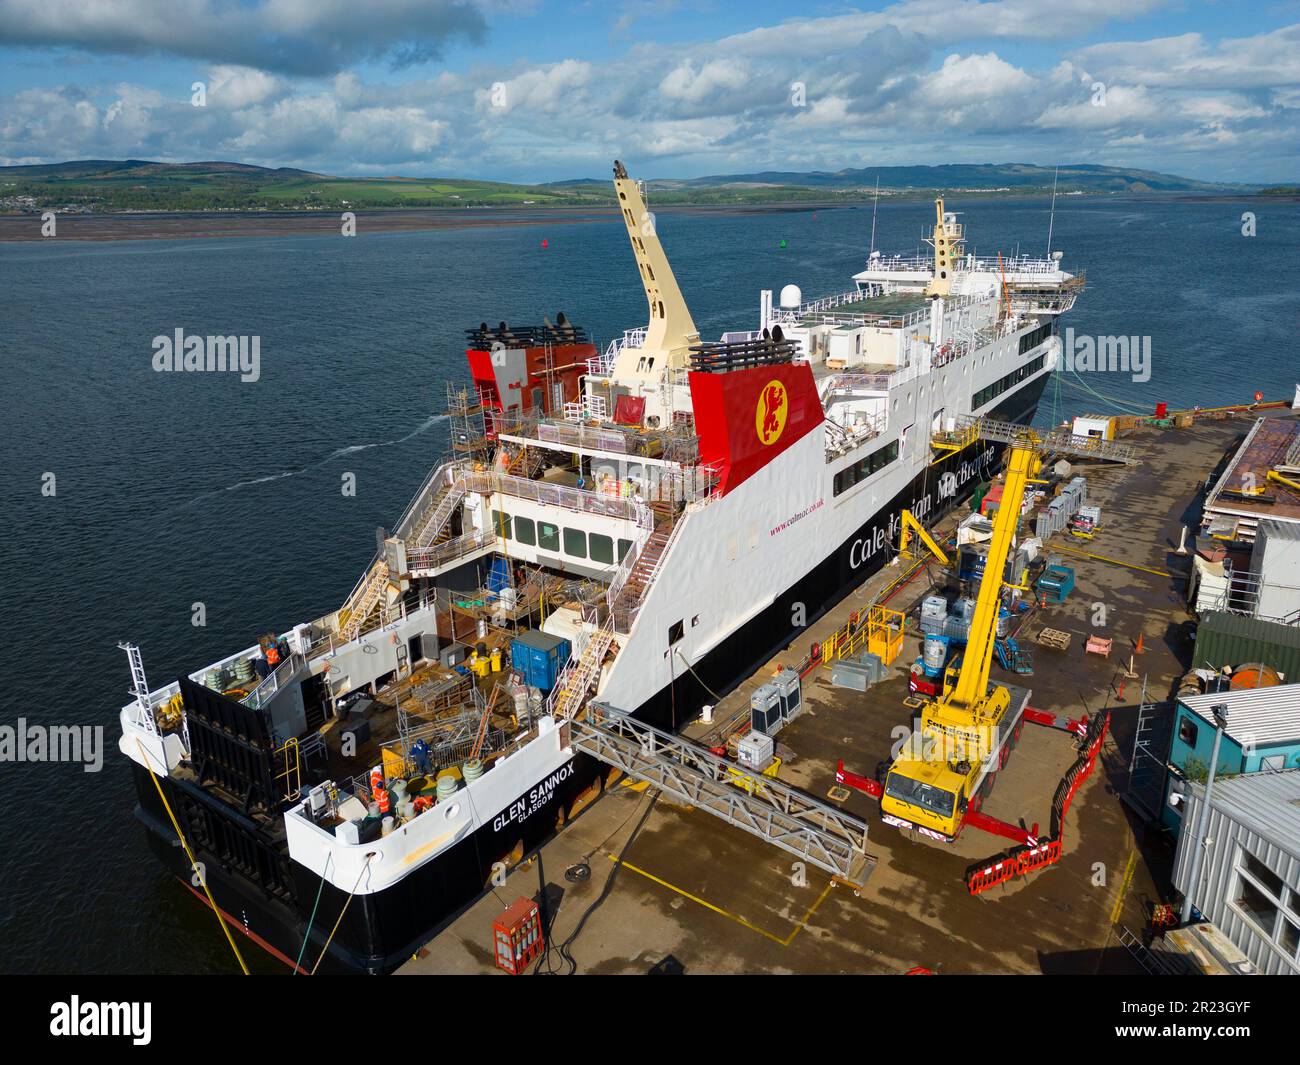 Port Glasgow, Scotland, UK. 16 May 2023. Latest aerial  images of Ferguson Marine shipyard in Port Glasgow with Glen Sannox and Hull 802. Stock Photo